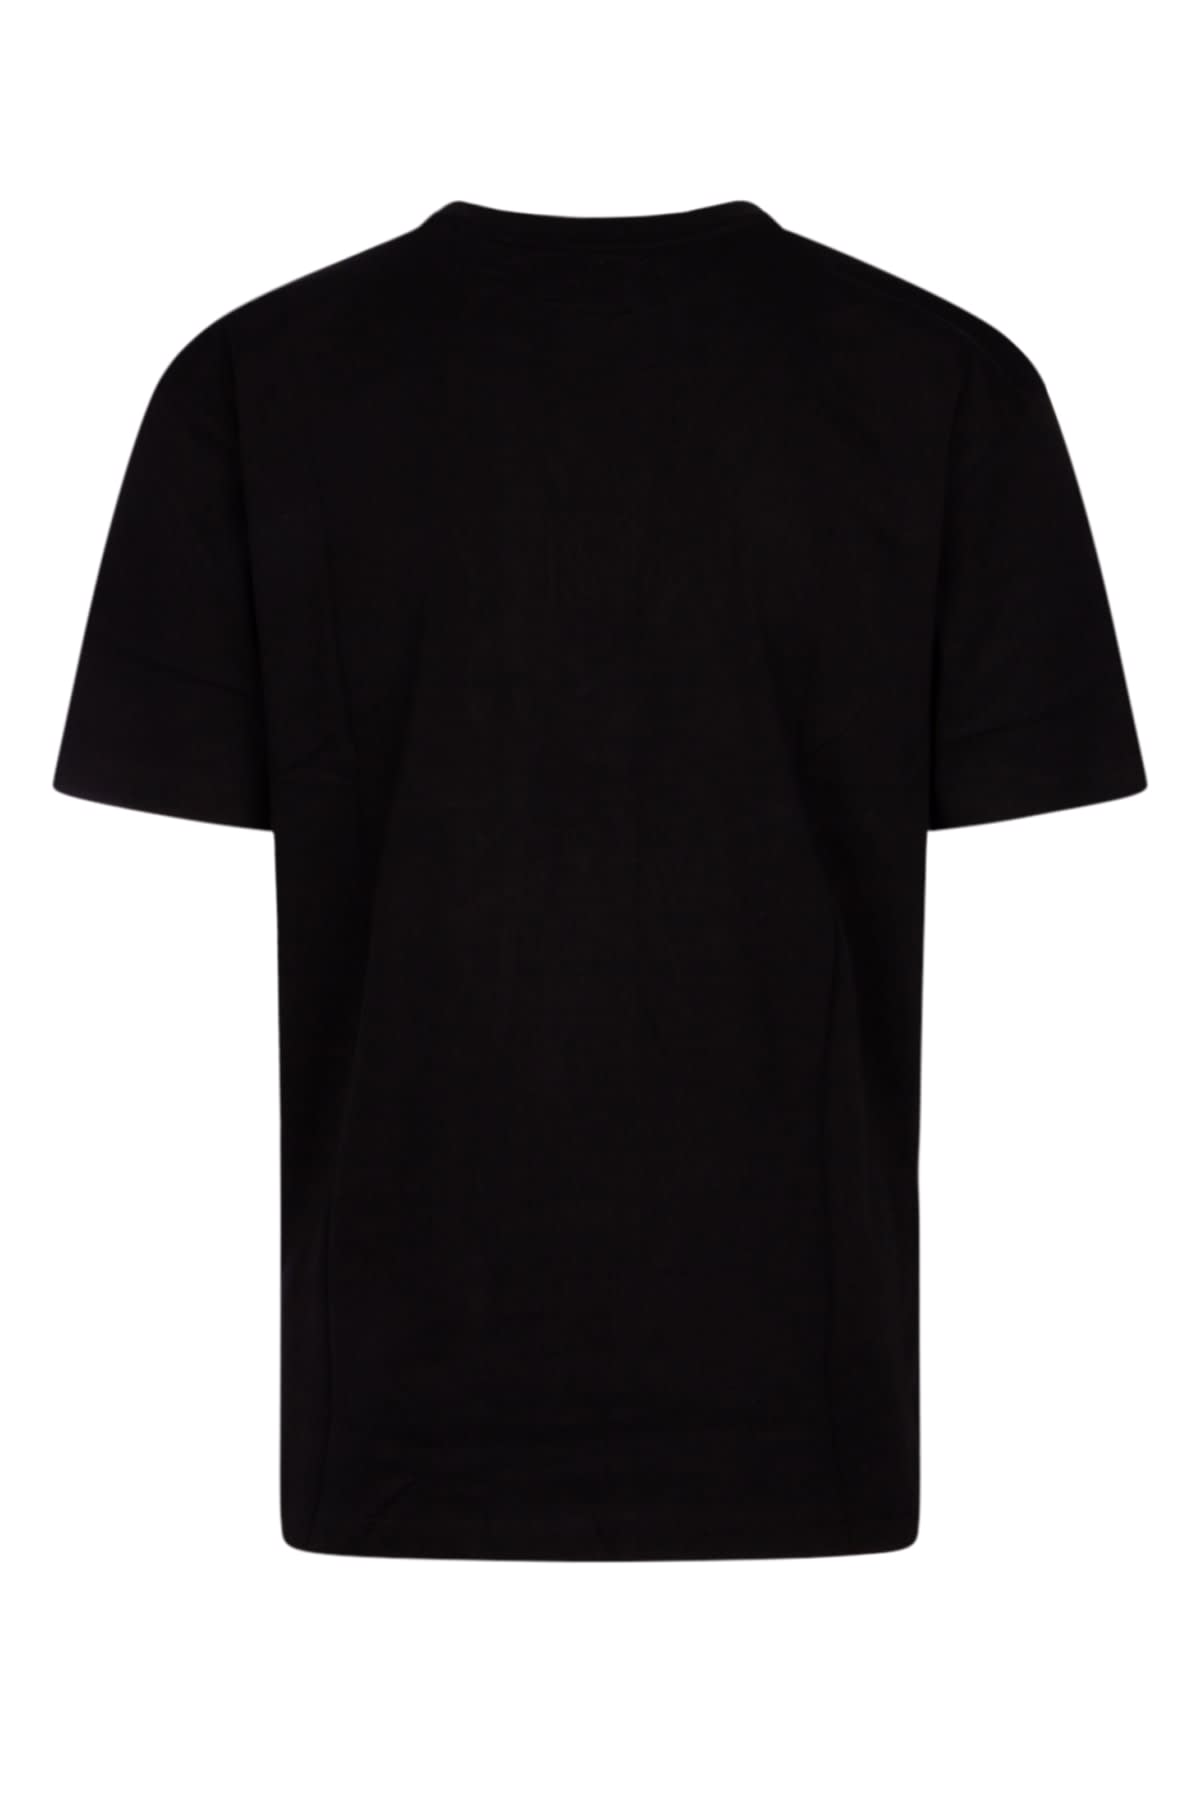 Market T-shirt In Black